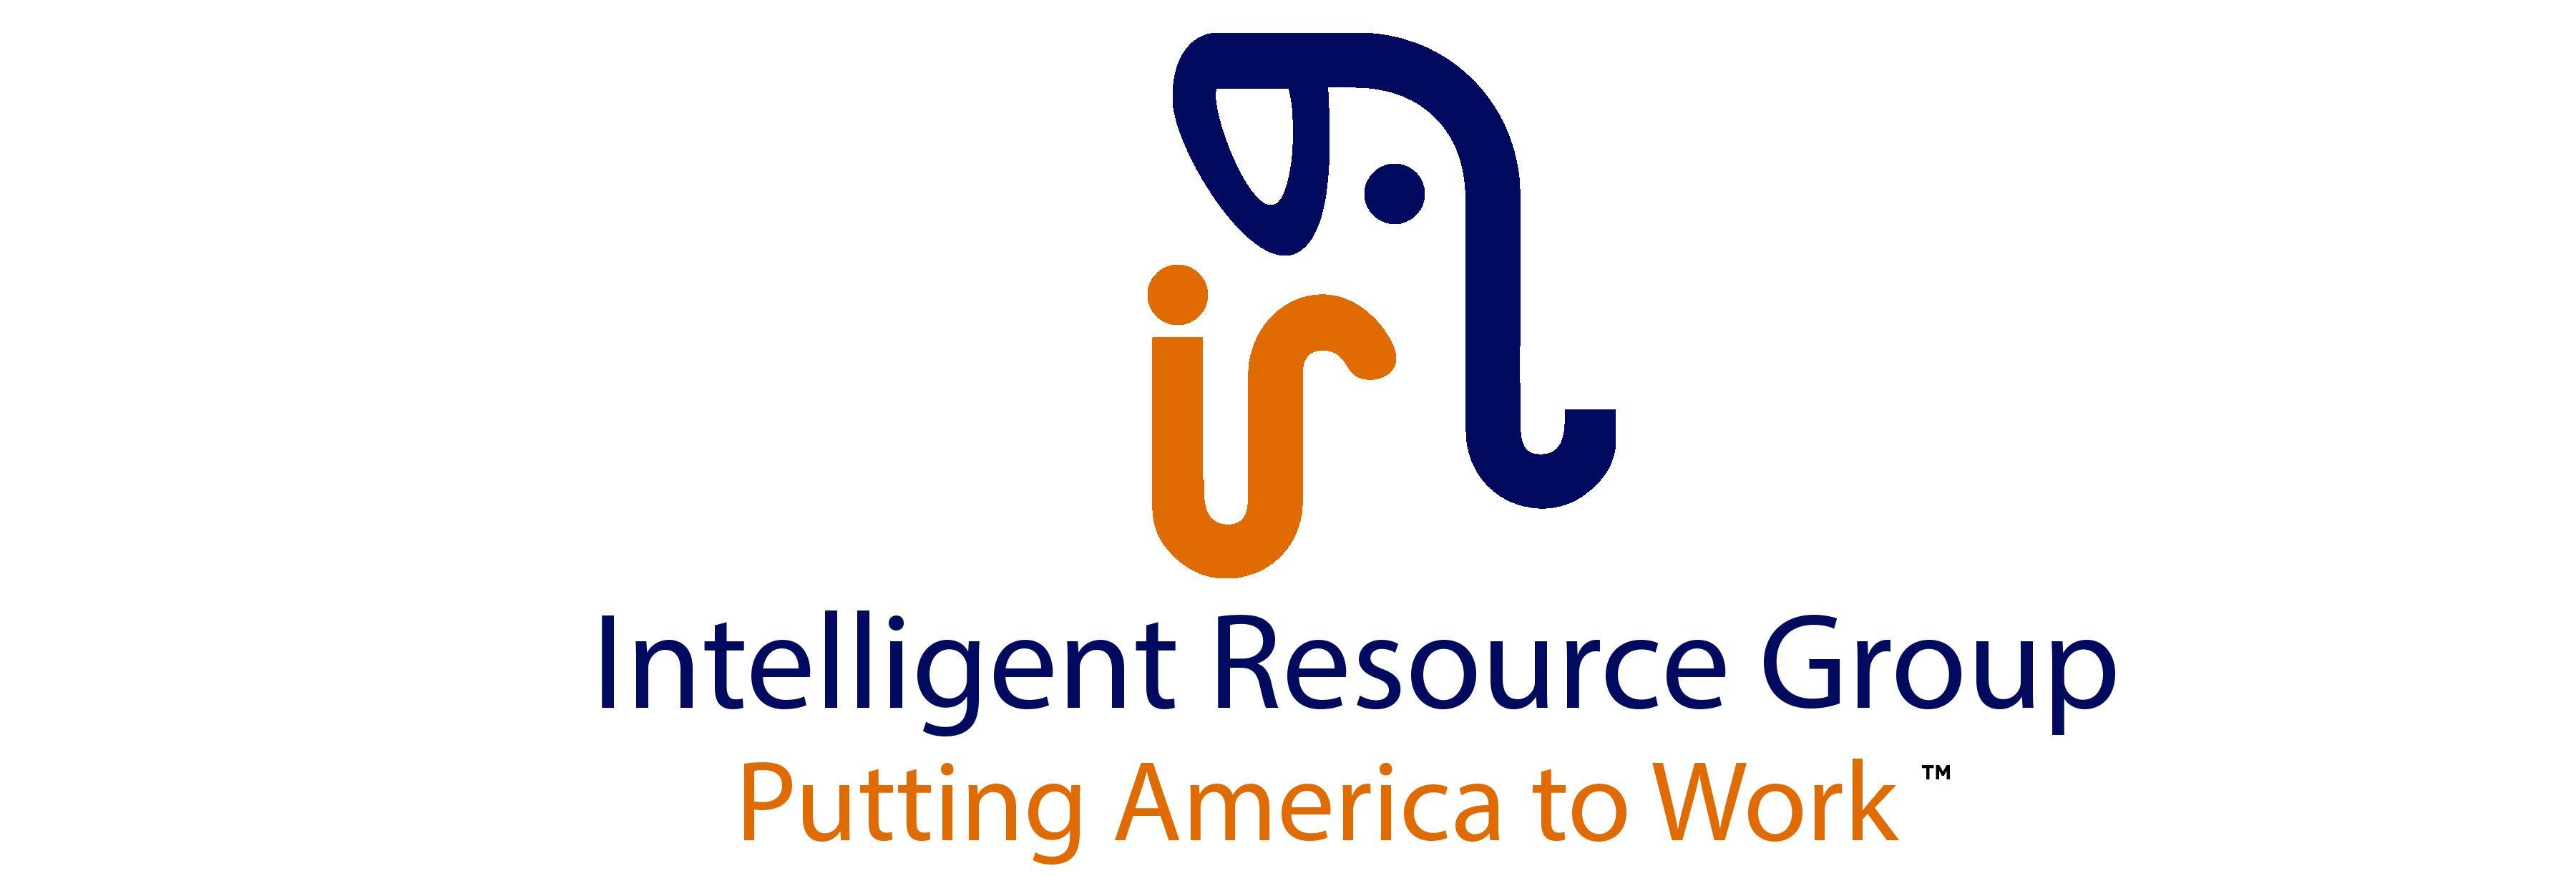 IRG Logo - IRG LOGO 2018. Intelligent Resource Group